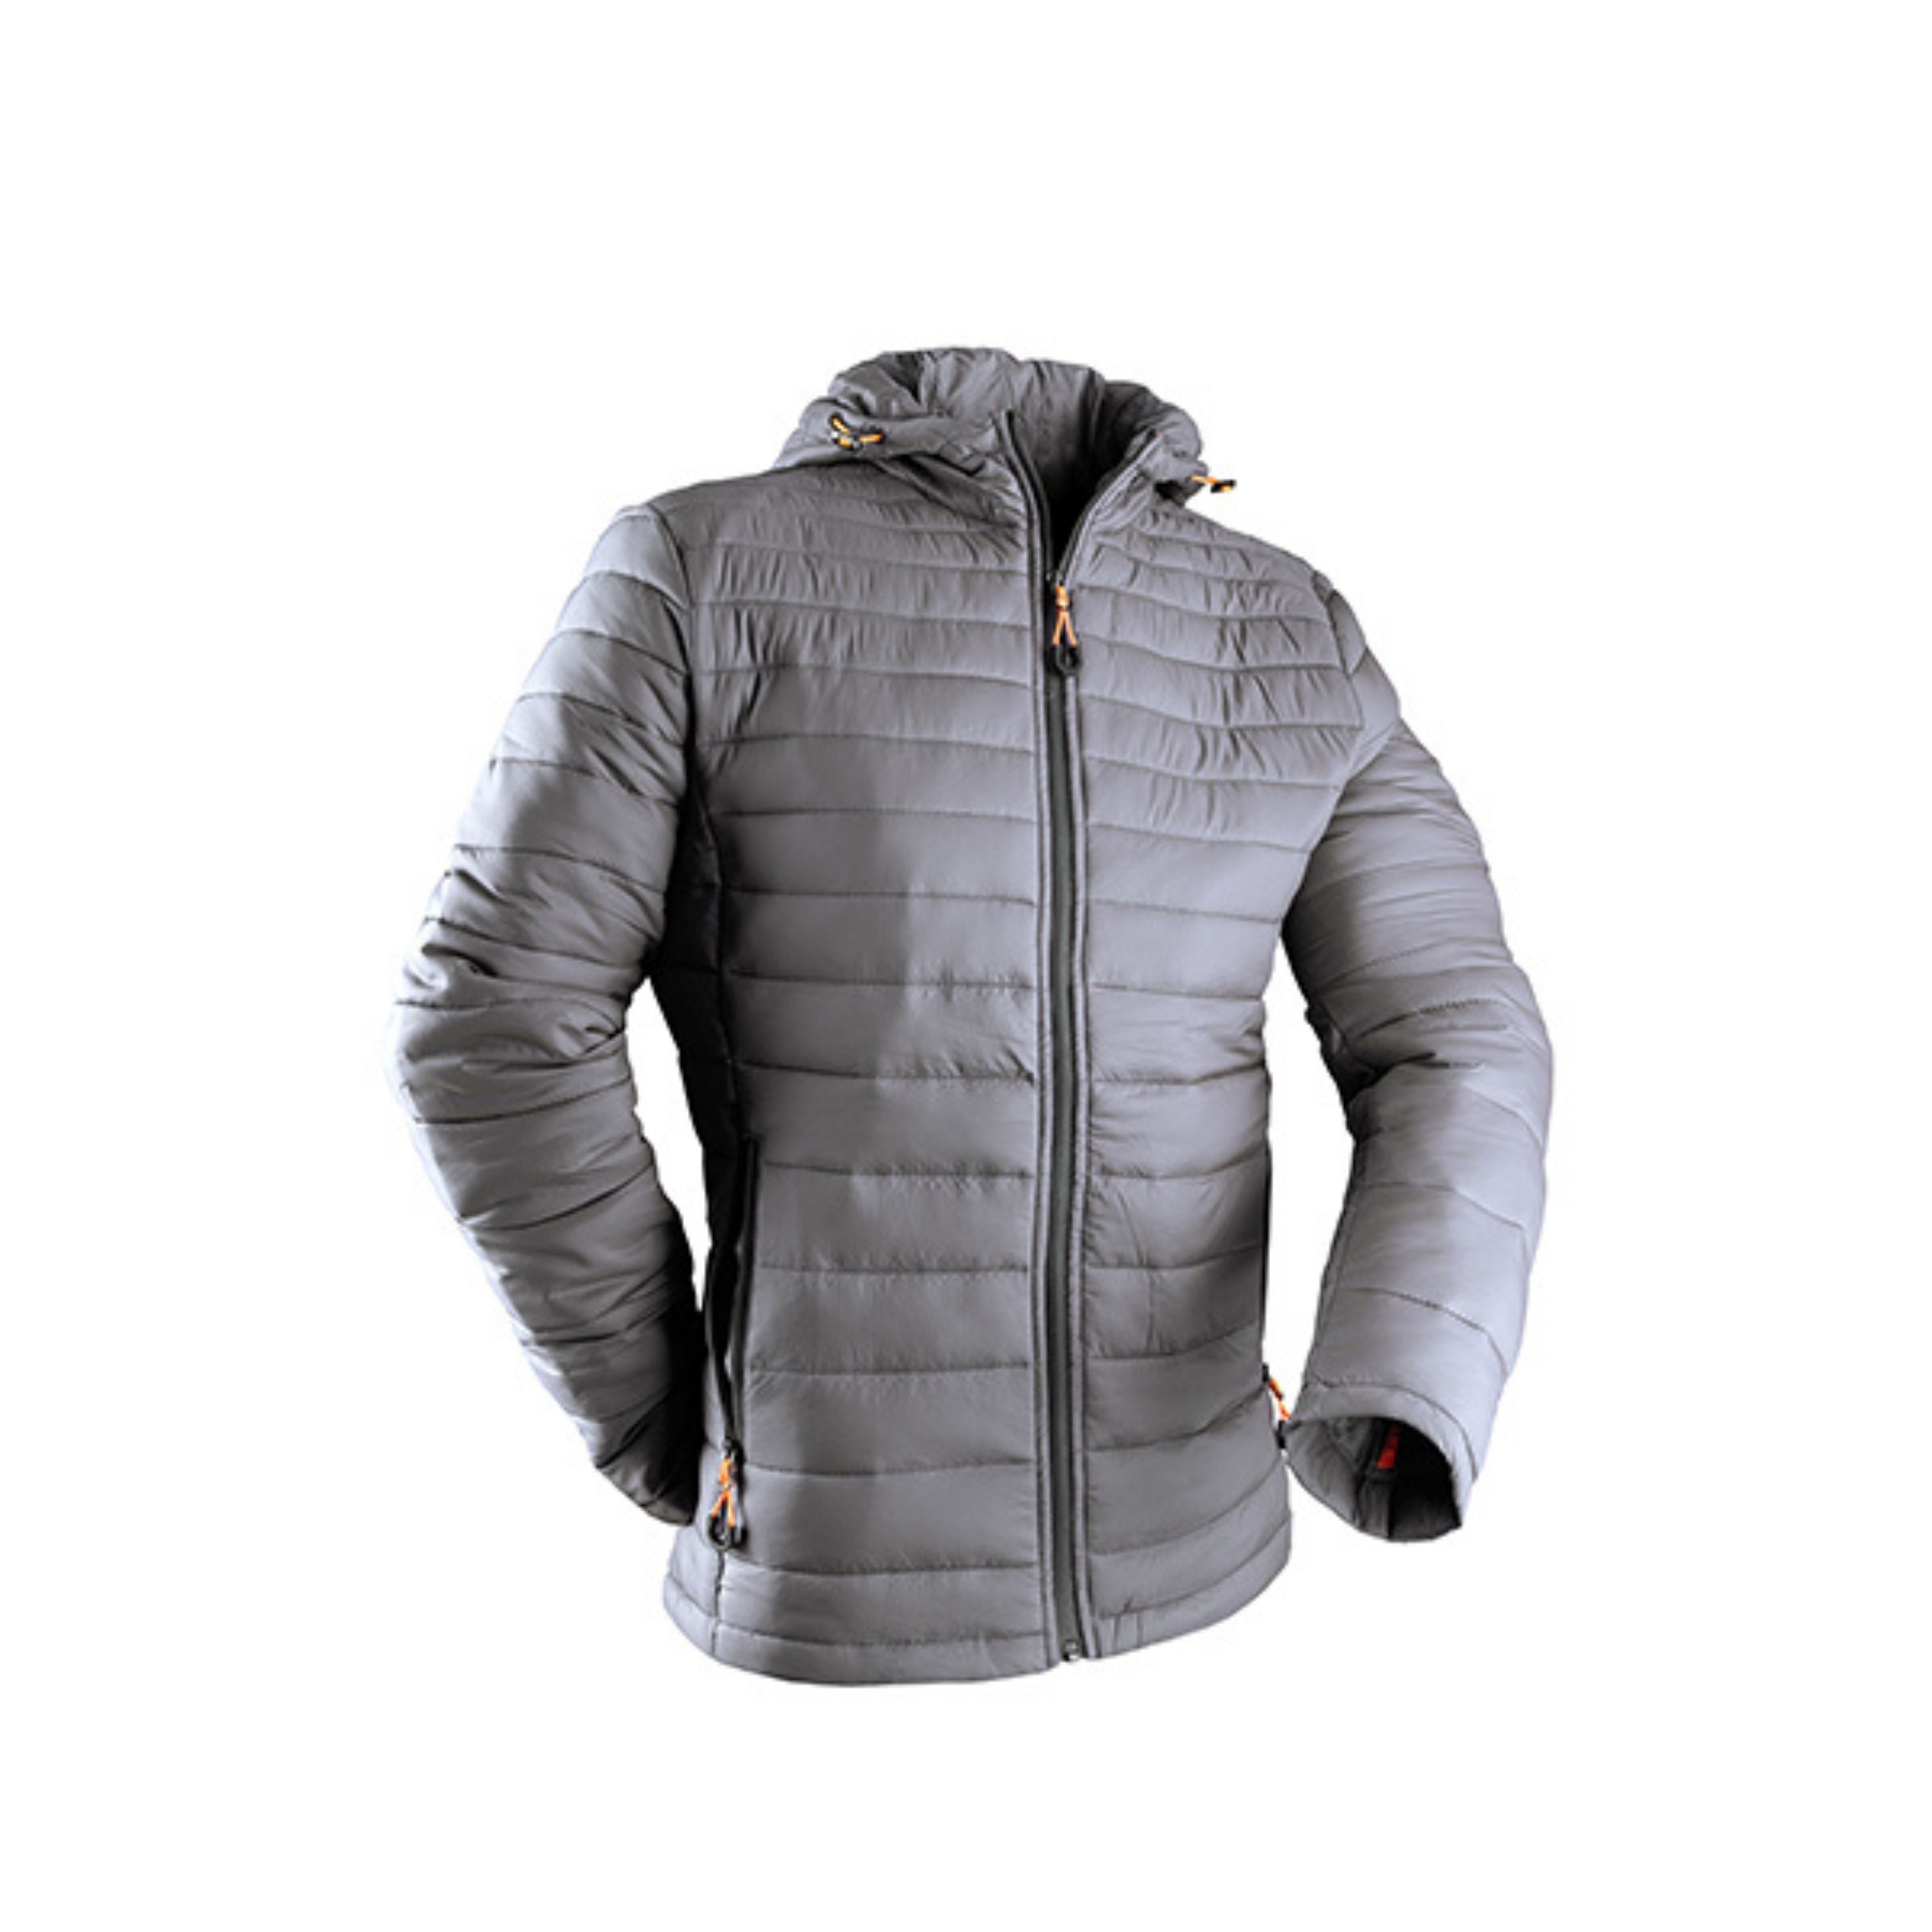 Manteau isolé “City” avec capuchon - Homme||“City” Insulated jacket with hood - Men's